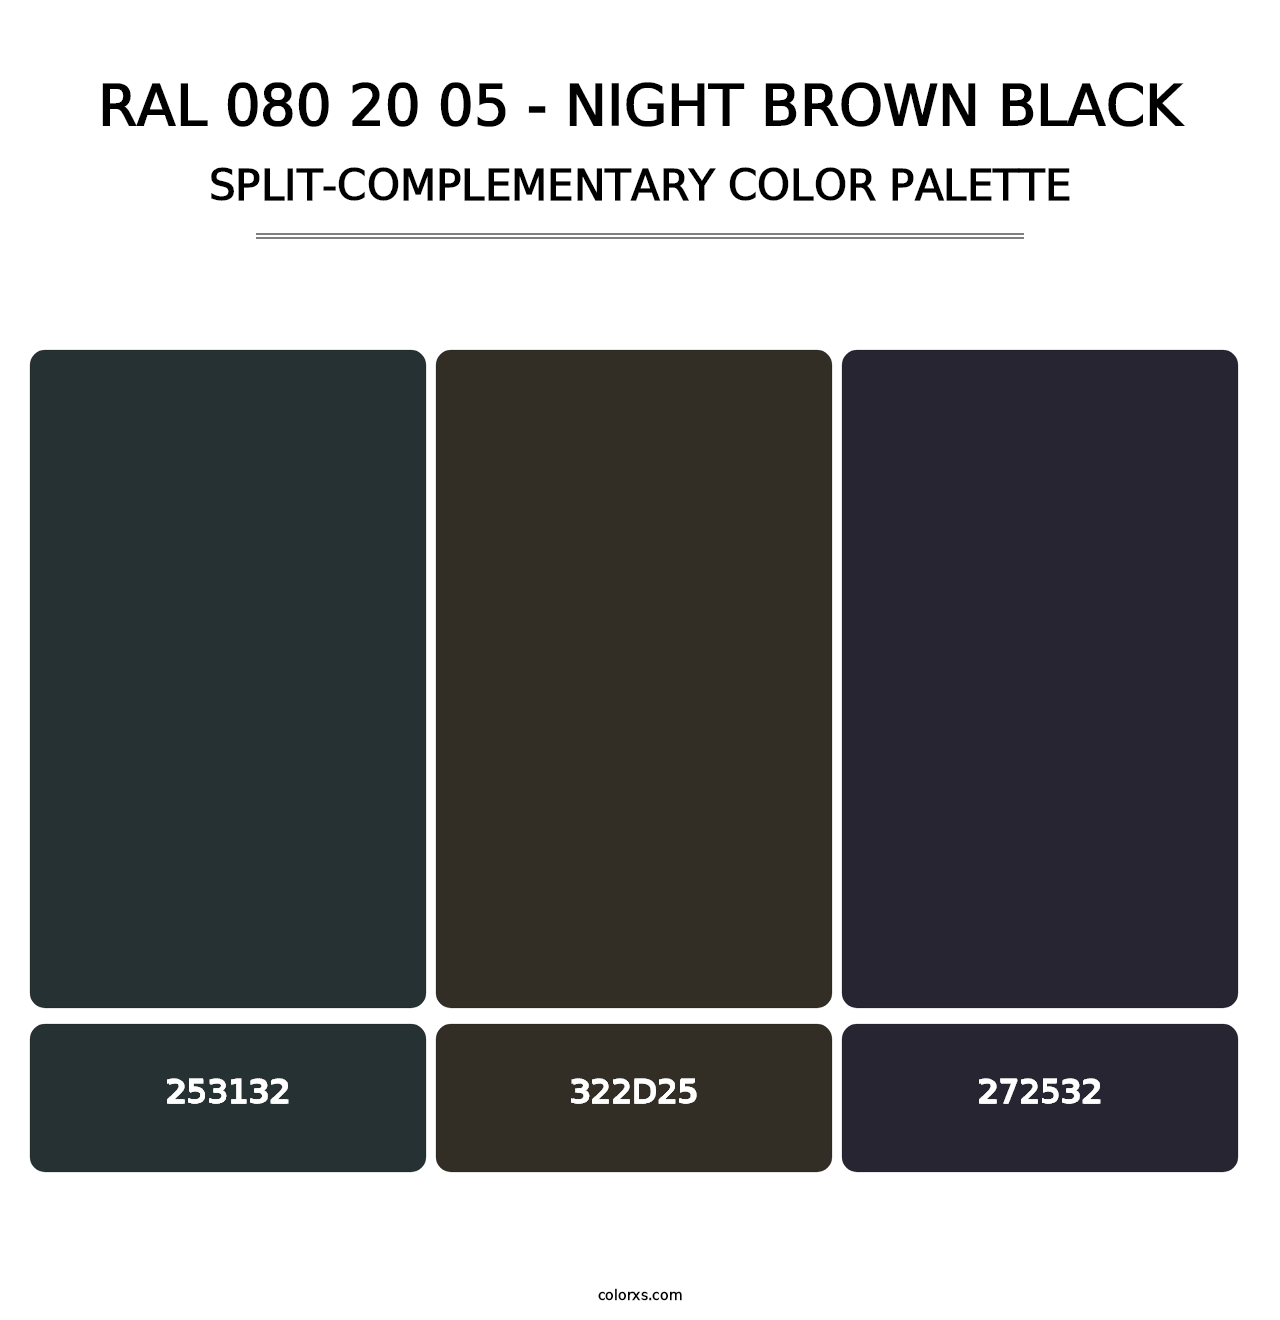 RAL 080 20 05 - Night Brown Black - Split-Complementary Color Palette